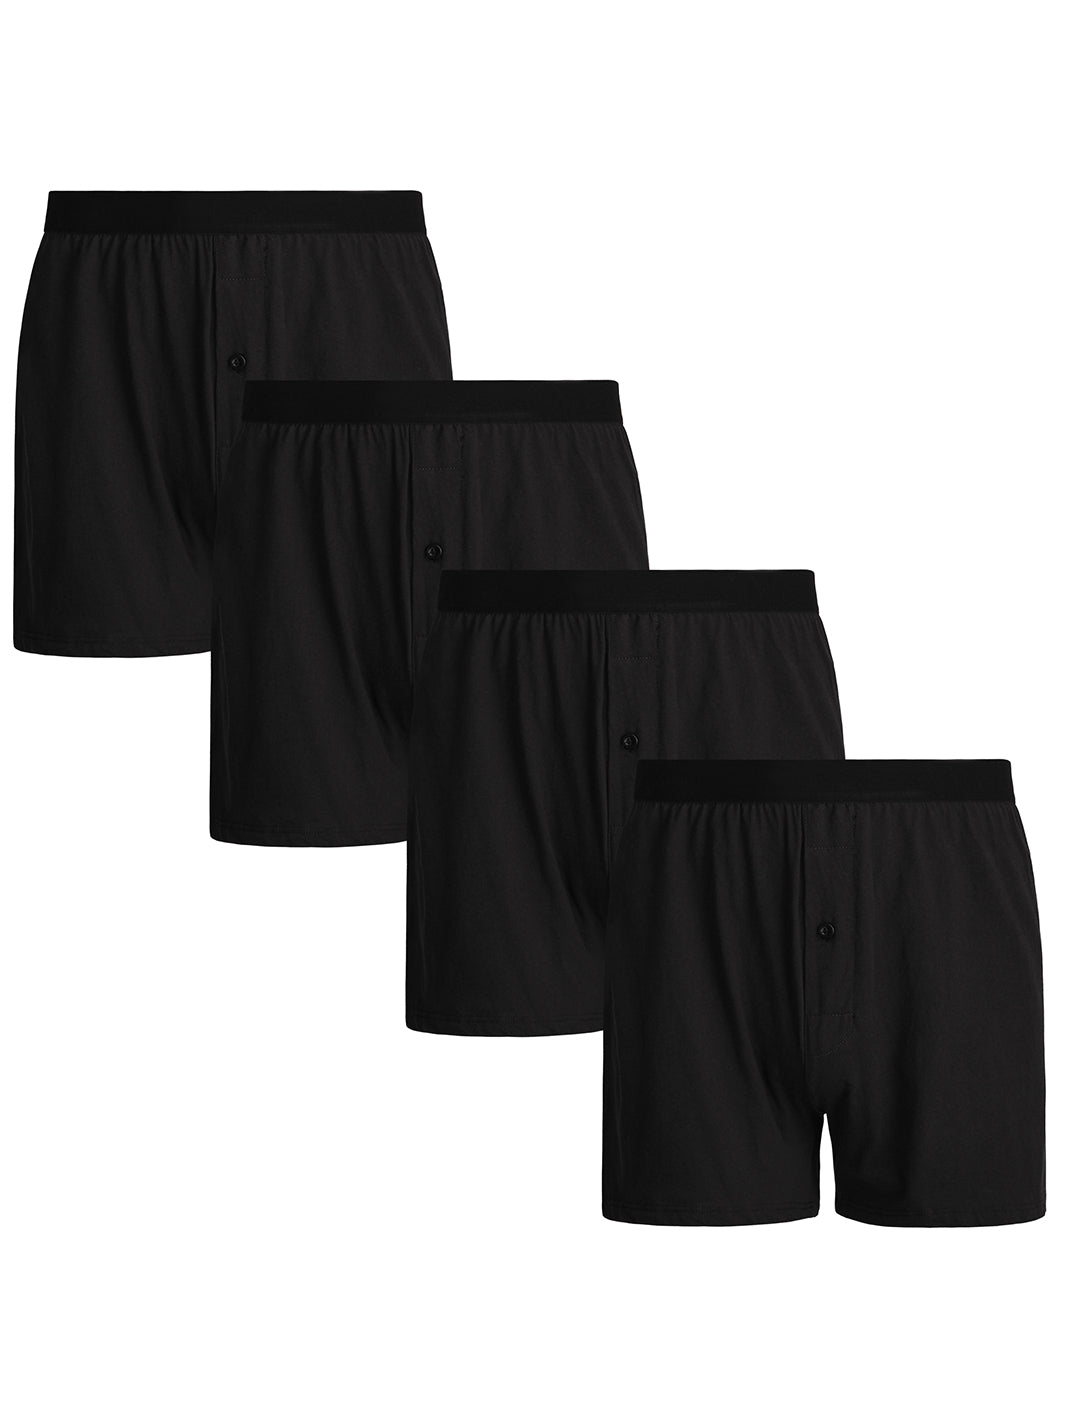 INNERSY Men's 5-Inch Boxer Briefs W/Fly No Side Seams Sports Mesh Underwear  4-Pa